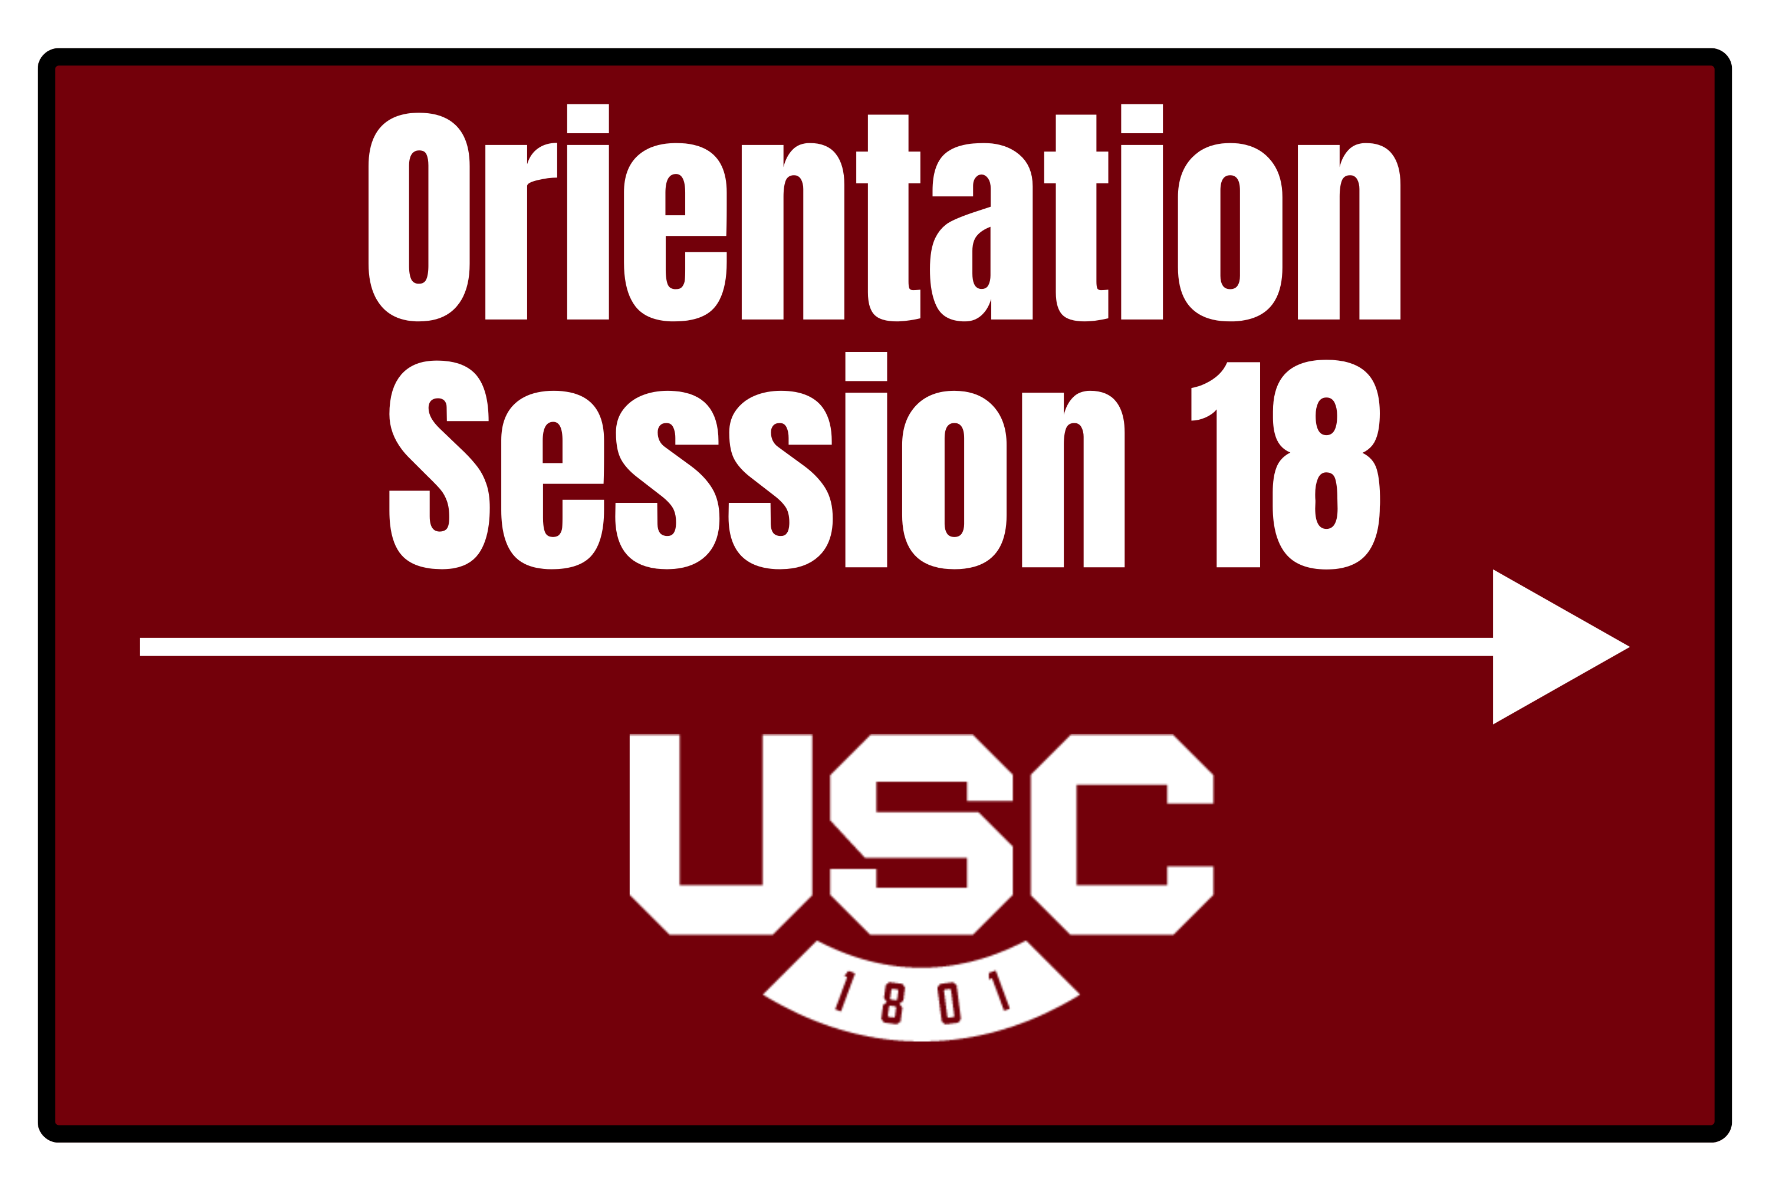 Orientation Session 18: July 29-30